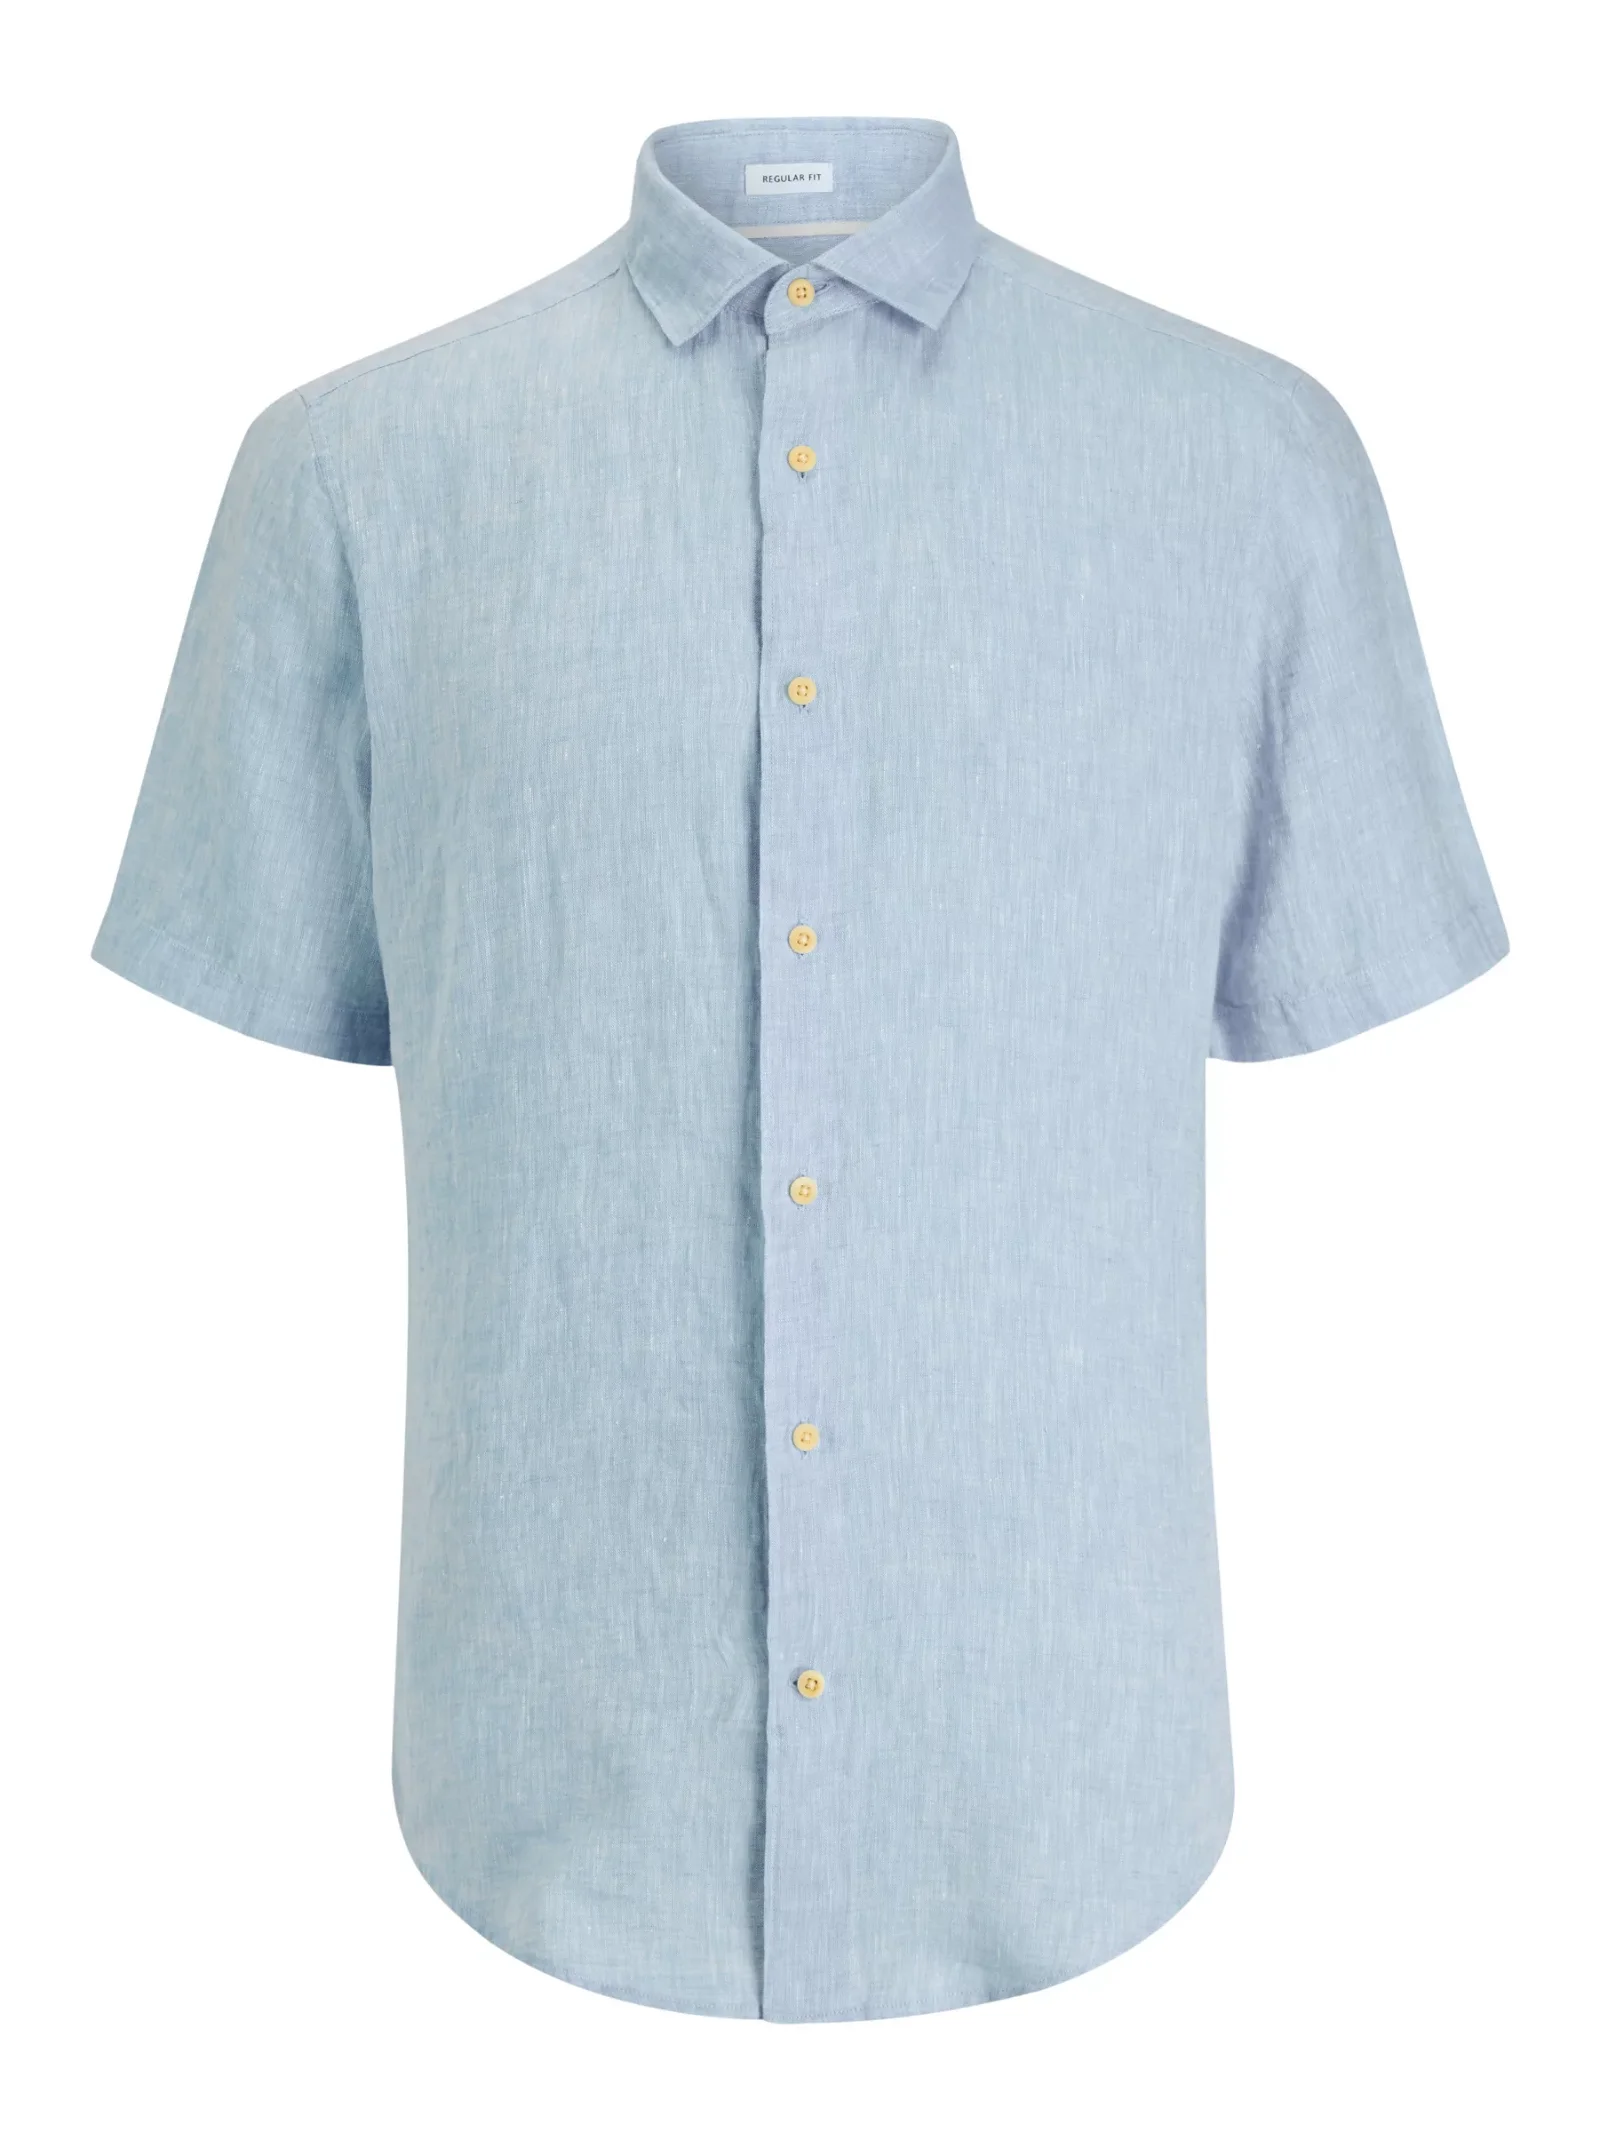 John Lewis Ultra Soft Modal Short Sleeve Henley Lounge Top, Denim Blue at  John Lewis & Partners